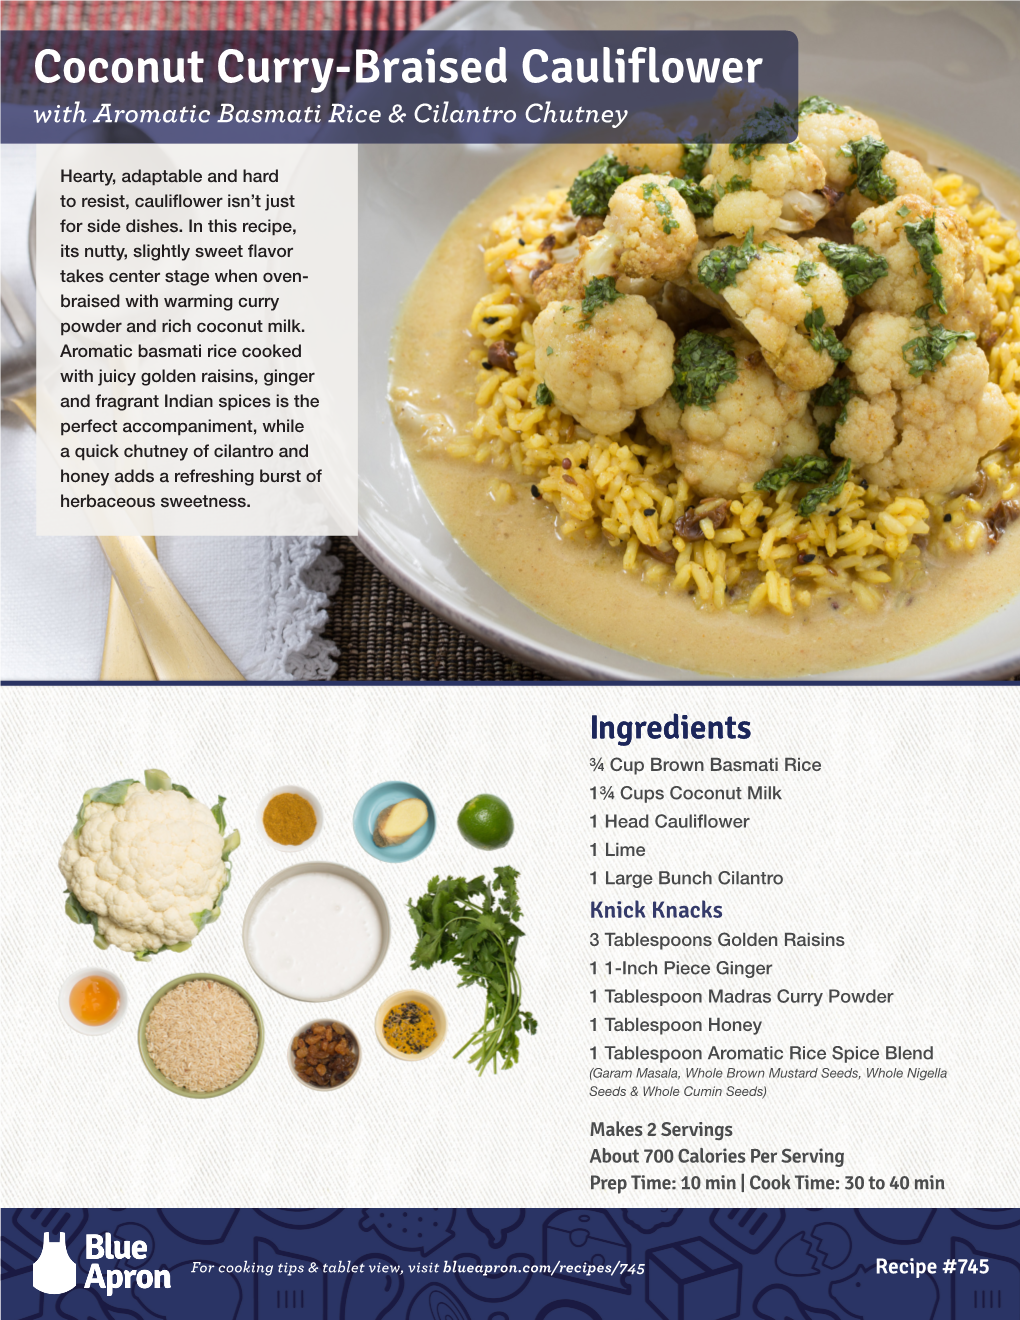 Coconut Curry-Braised Cauliflower with Aromatic Basmati Rice & Cilantro Chutney